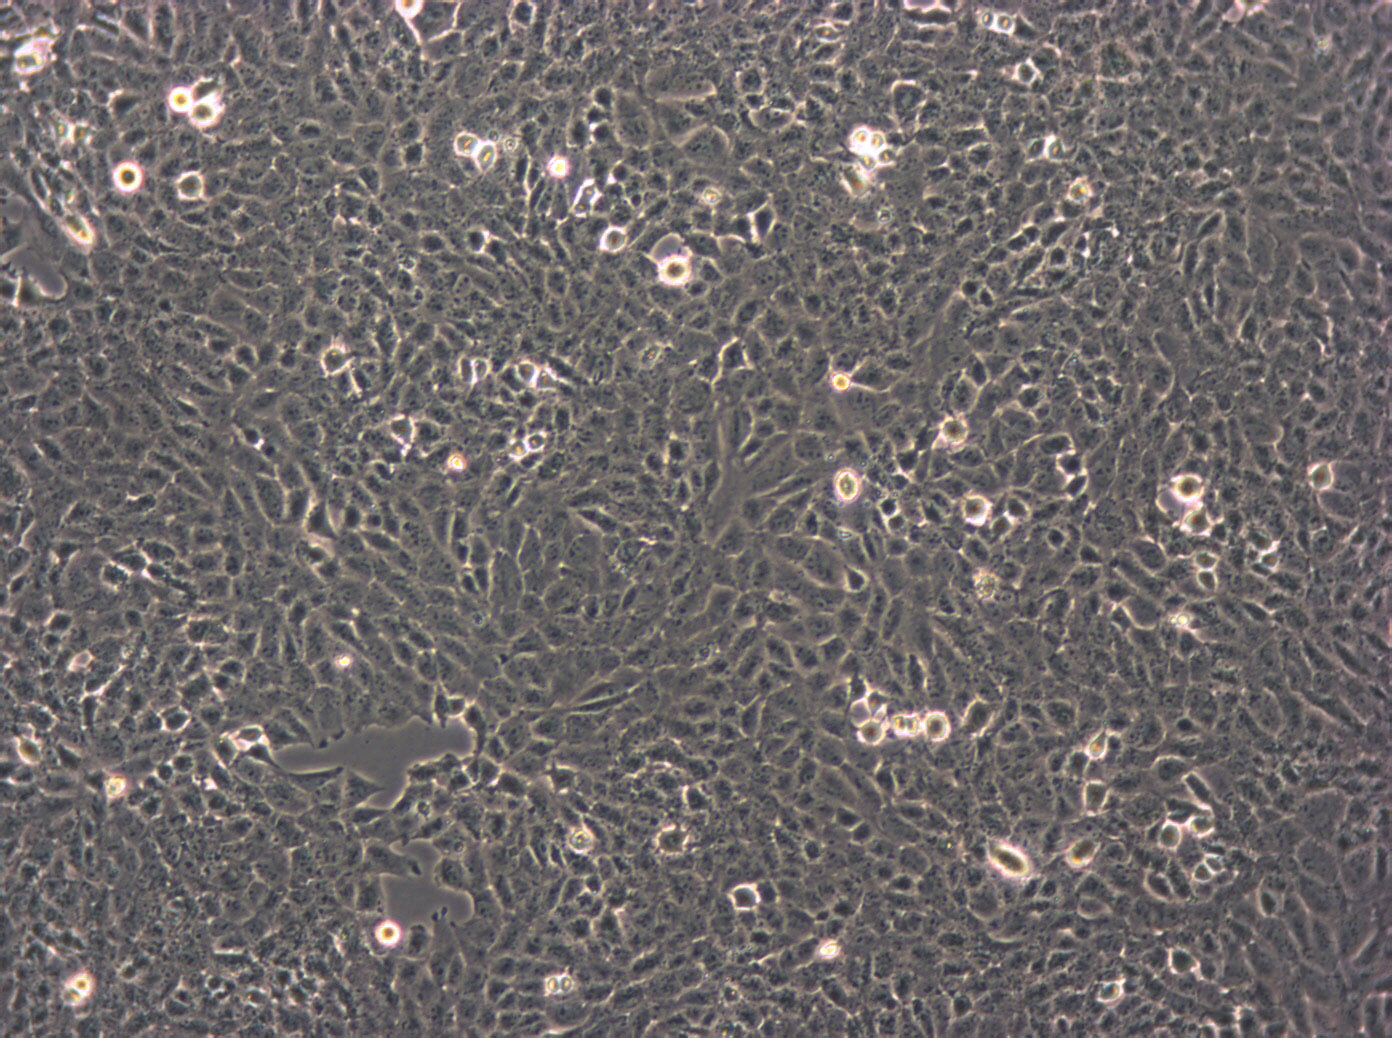 MC3T3-E1 Cells|小鼠胚胎成骨细胞前体需消化细胞系,MC3T3-E1 Cells